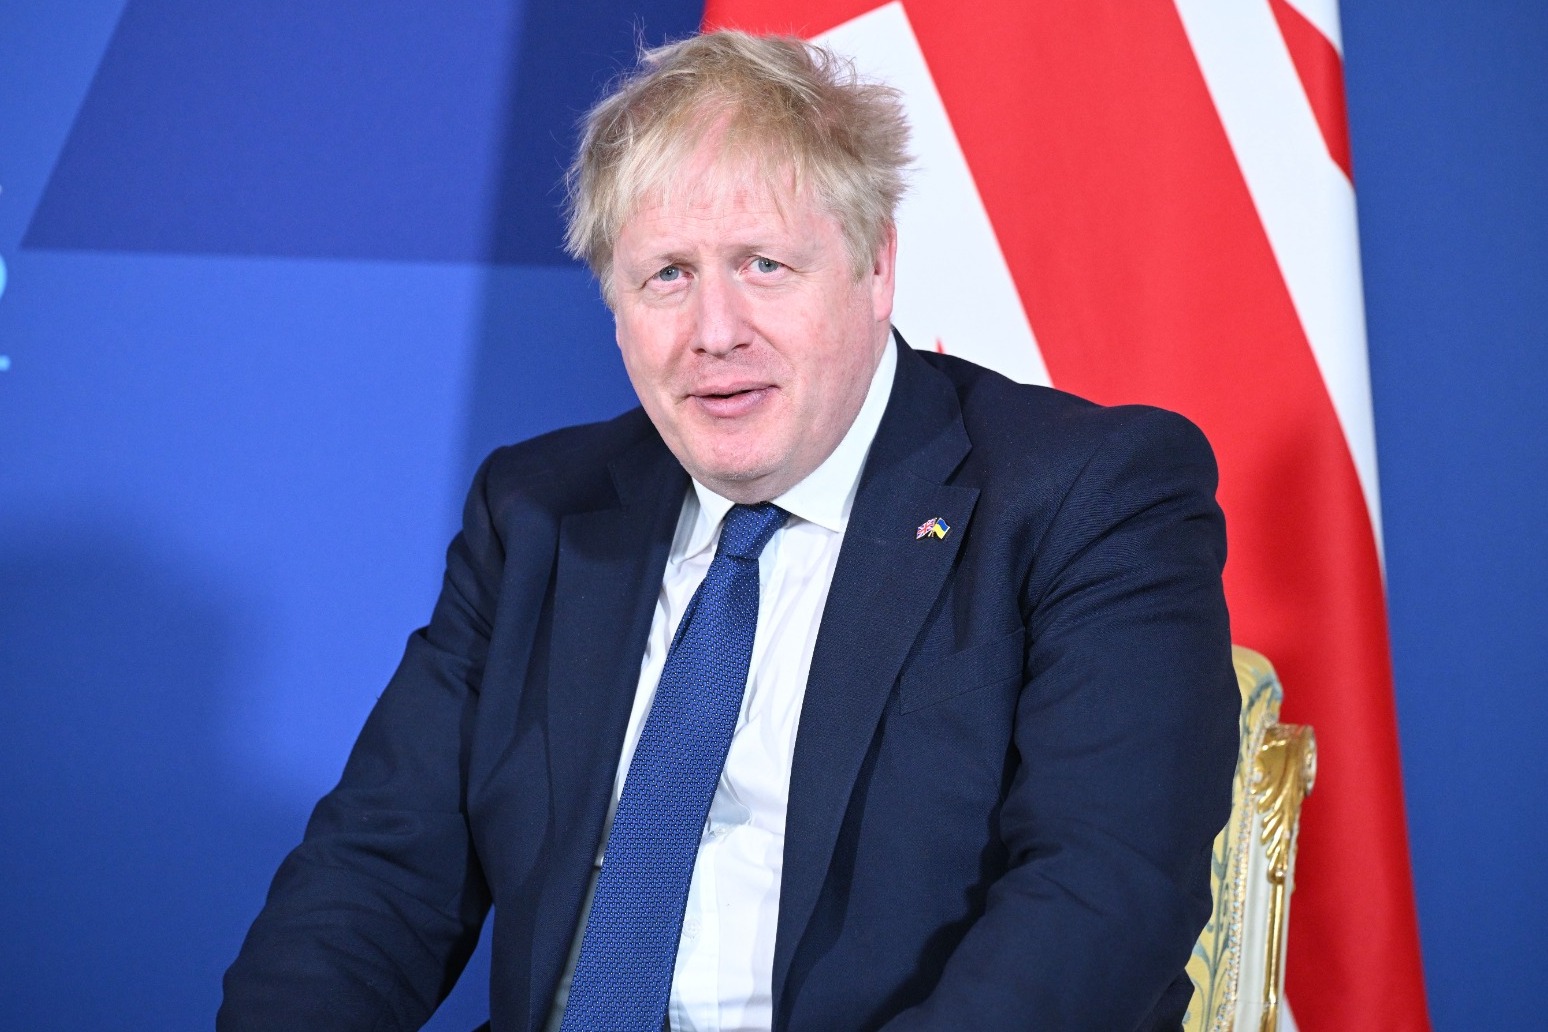 UK will be generous to Ukrainian refugees says Johnson